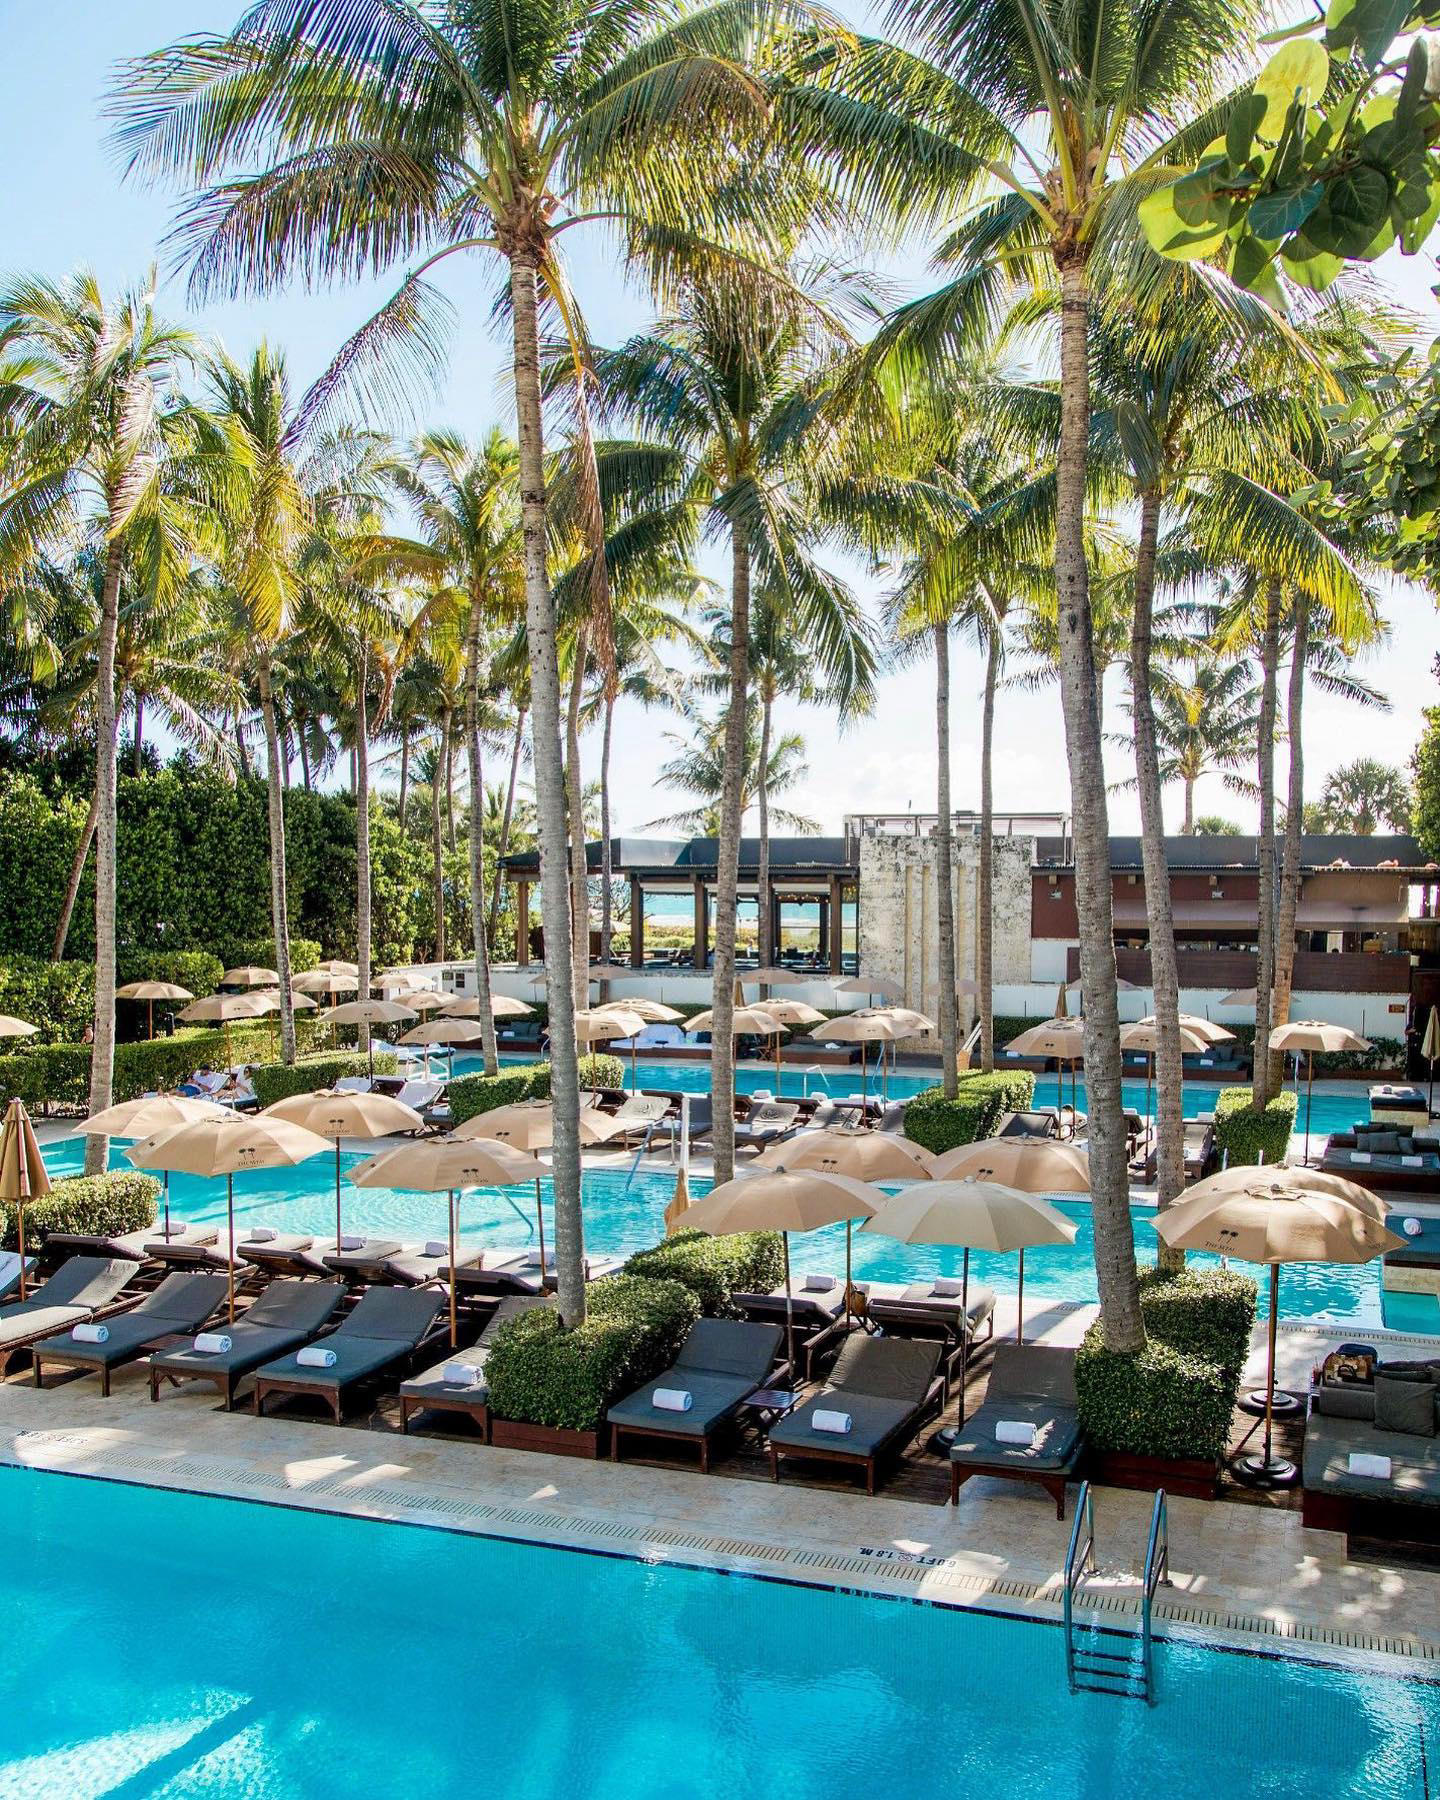 The Setai, Miami Beach - Your ideal poolside escape